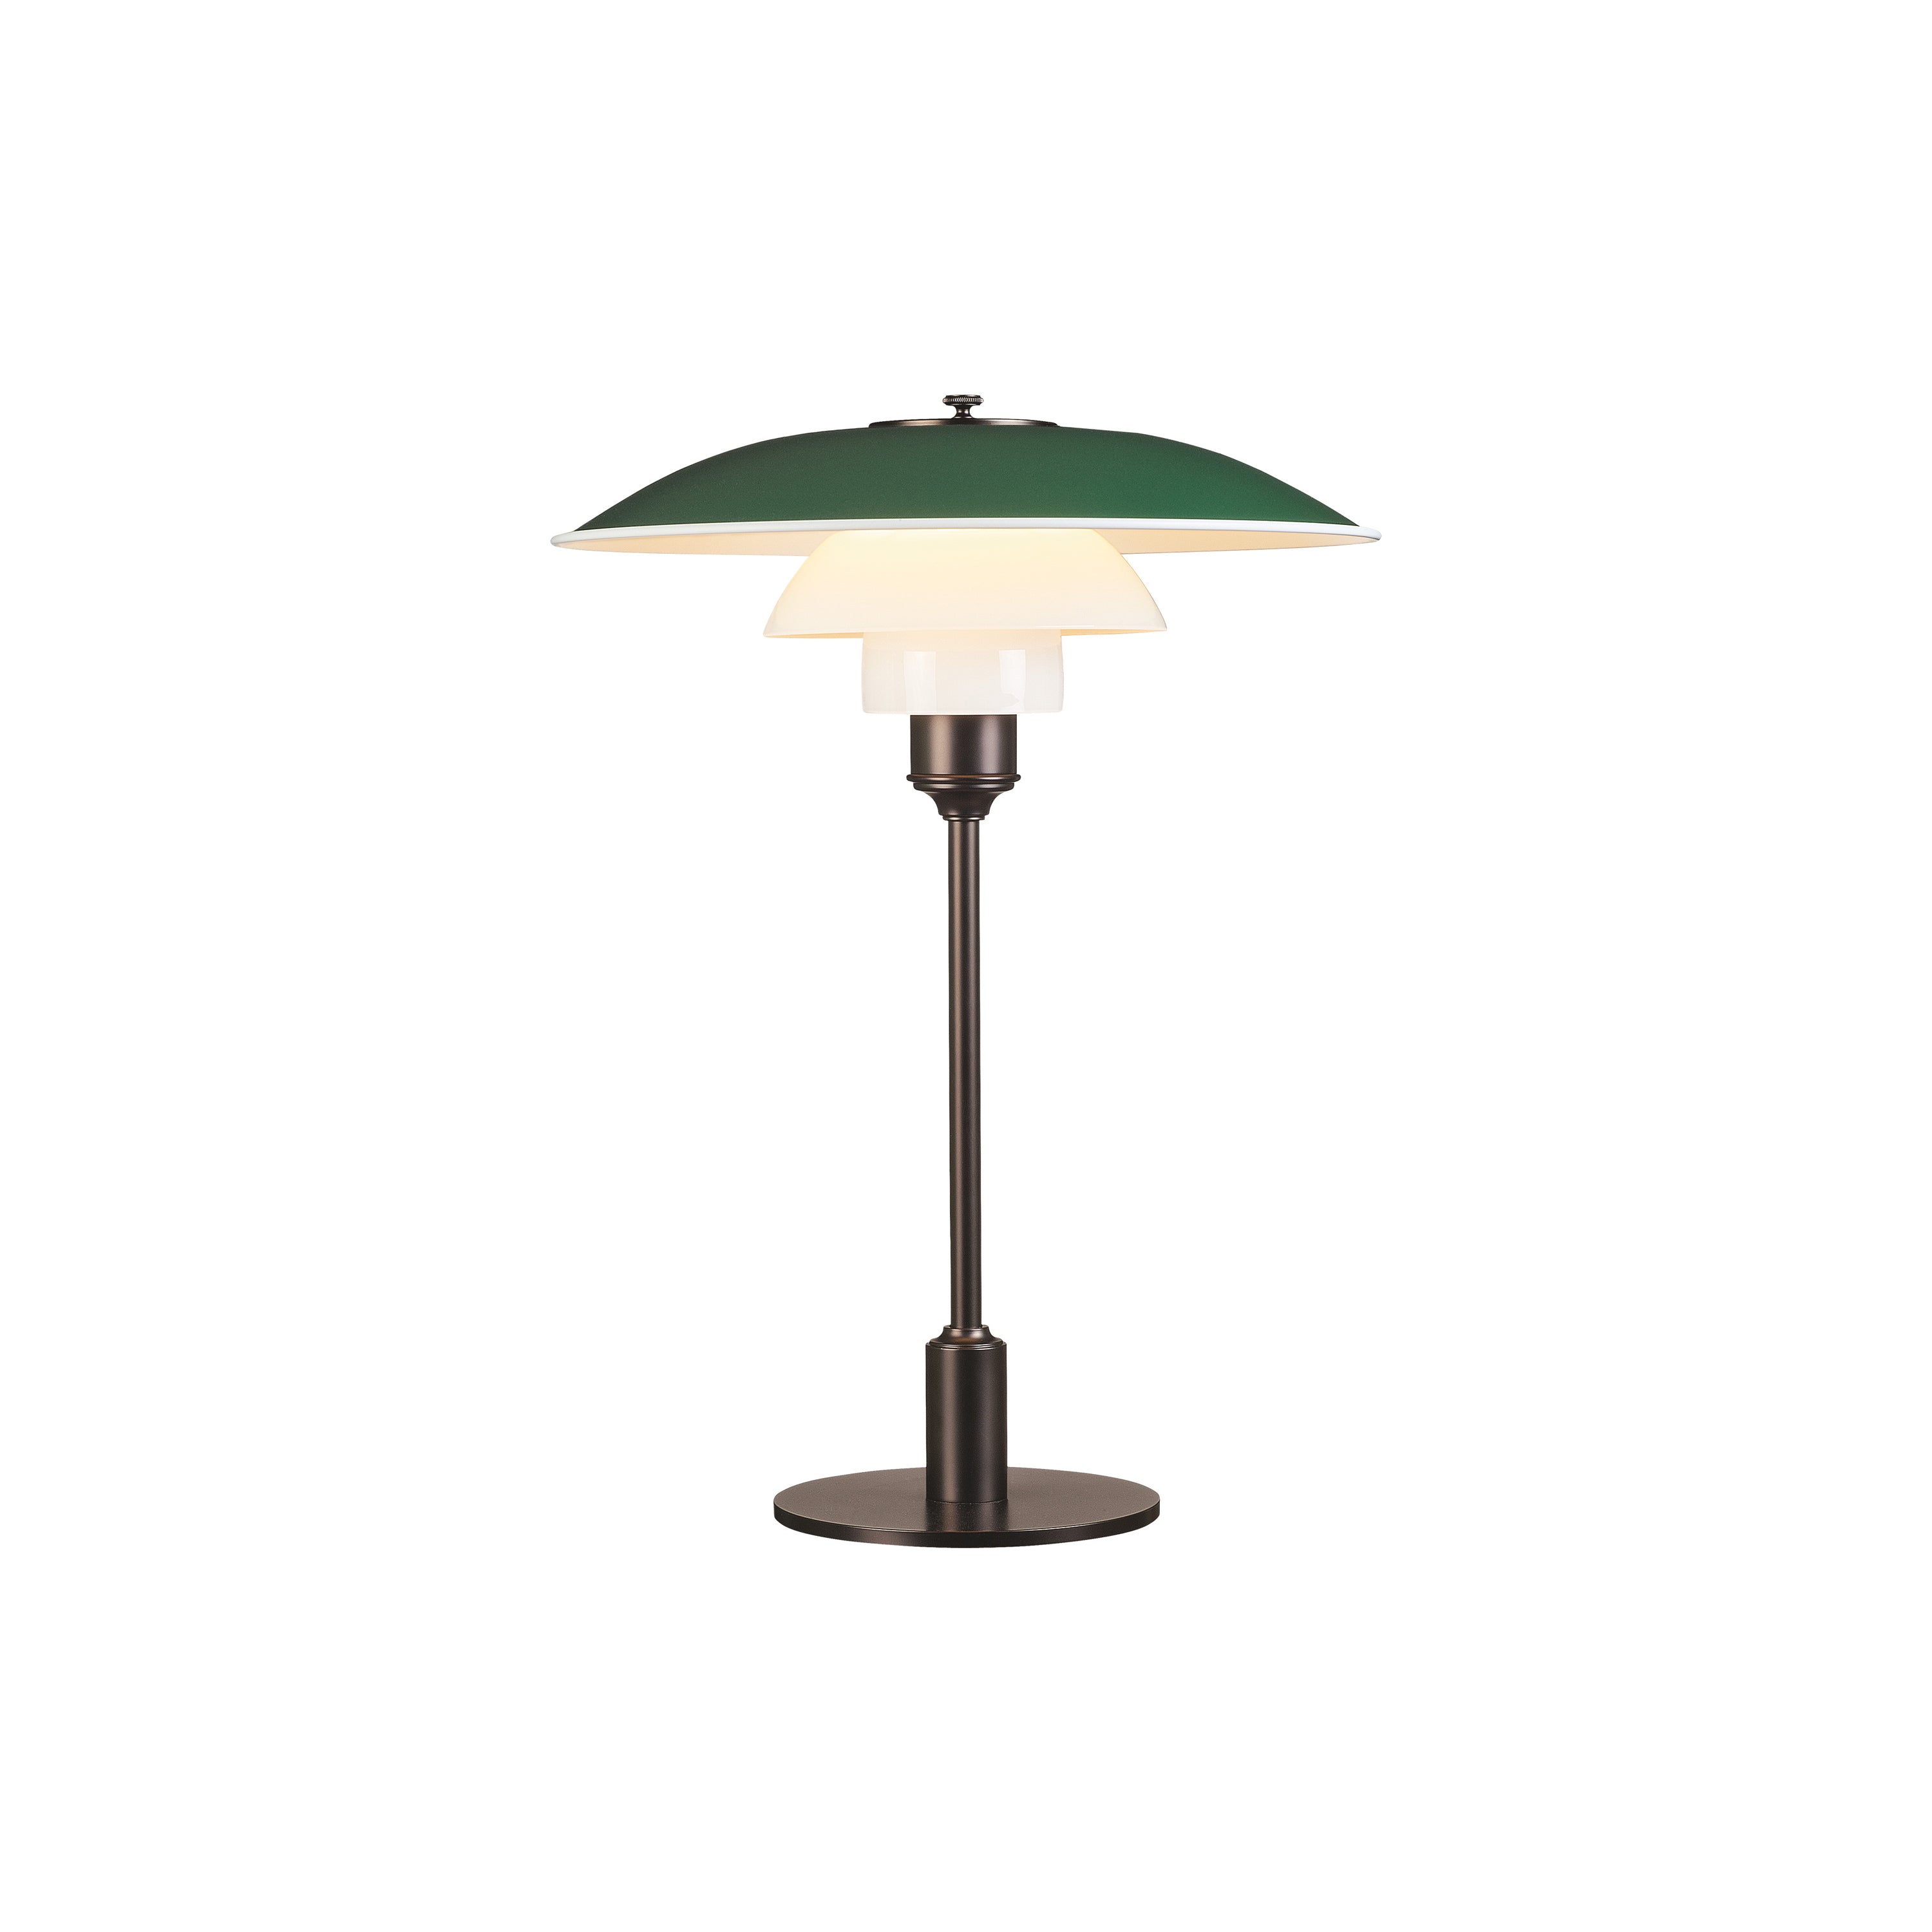 PH 3½-2½ Table Lamp: Green